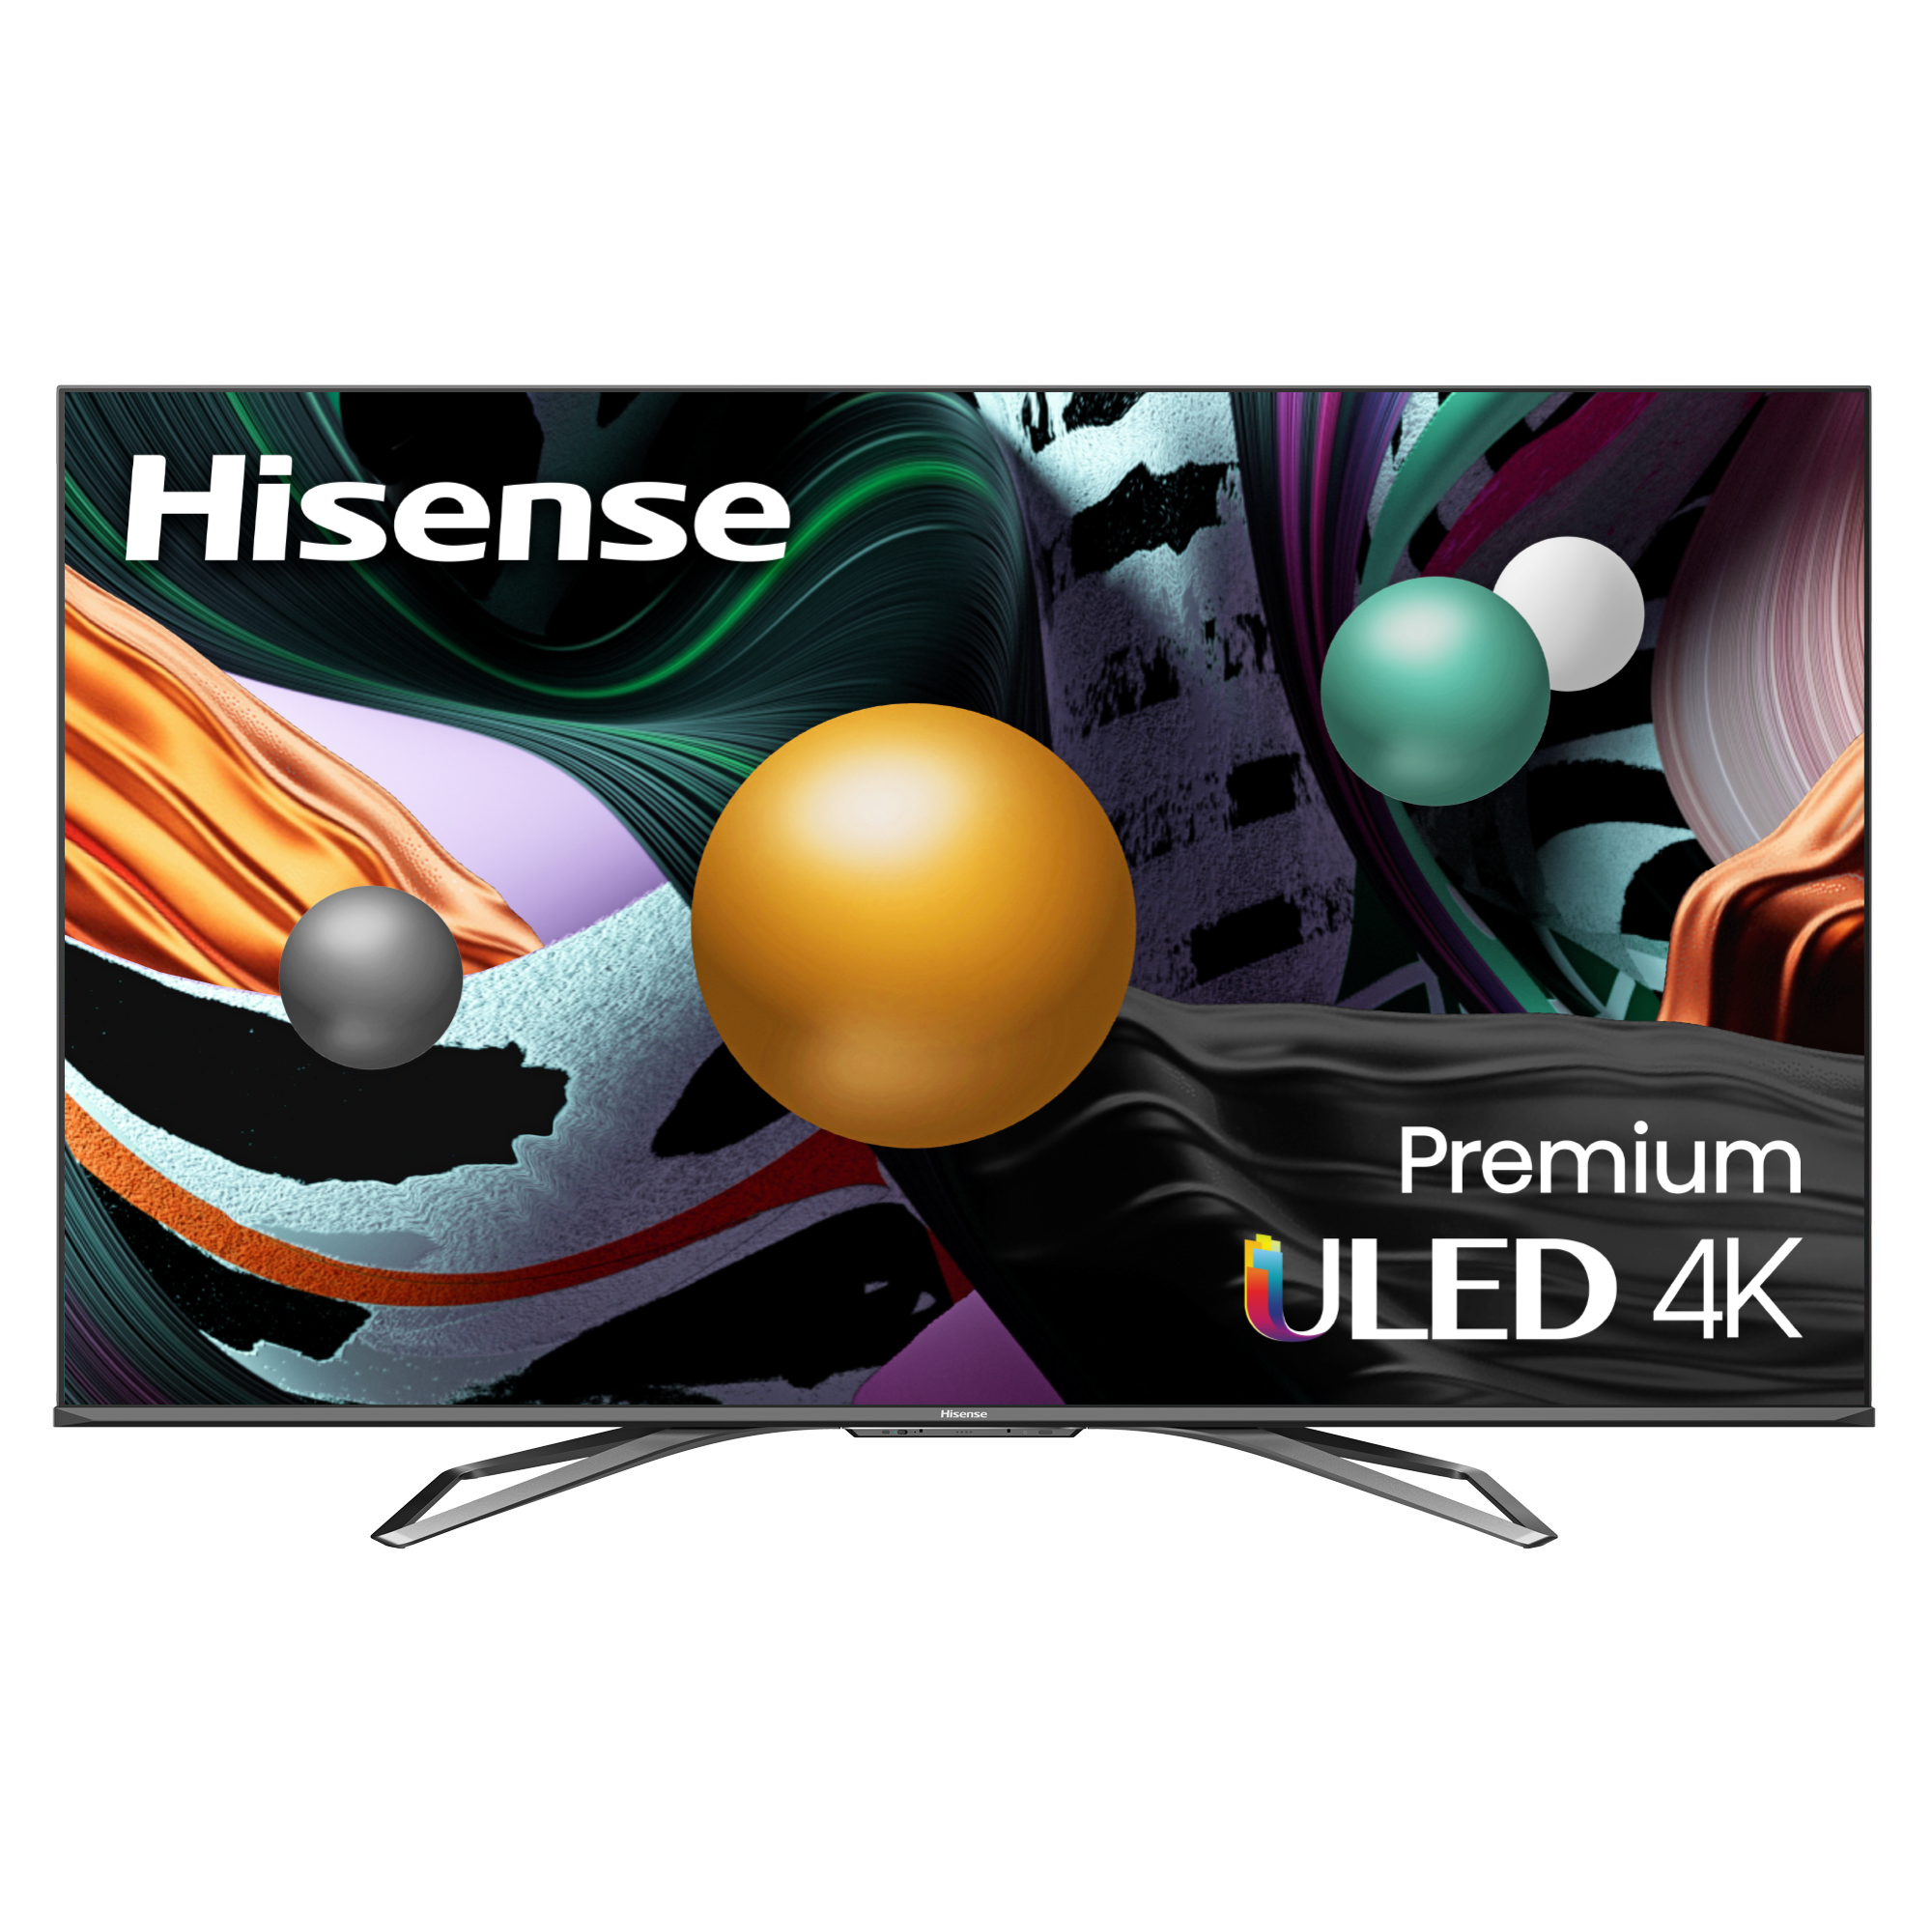 Hisense 55-inch 4K Premium HDR Dolby Vision 1500-nit Motion Rate 480 ULED Smart TV (55U8G) - image 1 of 21